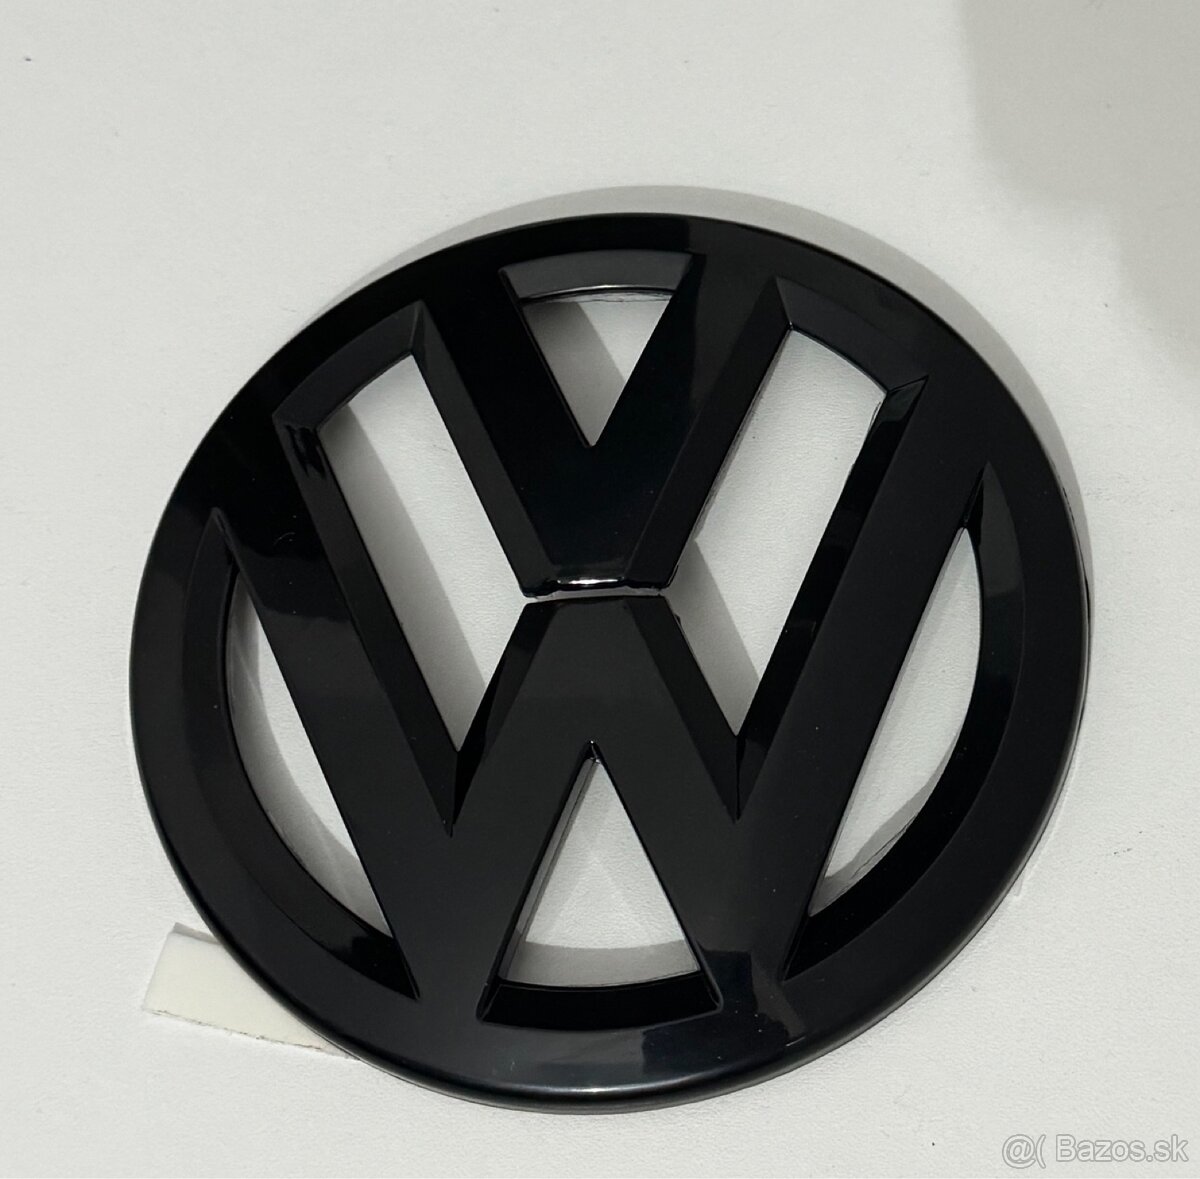 Vw logo front